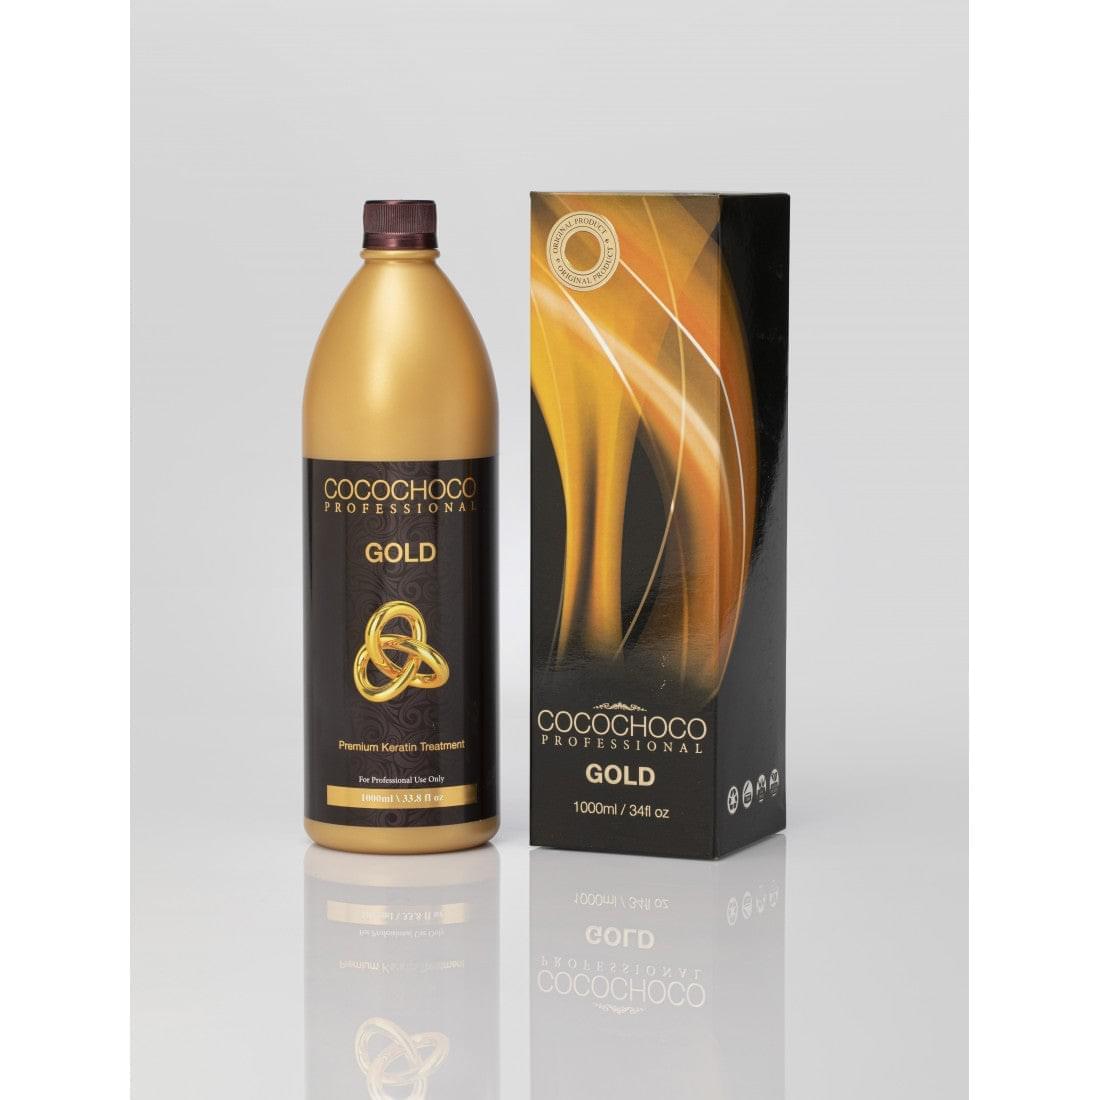 COCOCHOCO Gold 1000ml Keratin Treatment For Super straight hair - 24 Karat